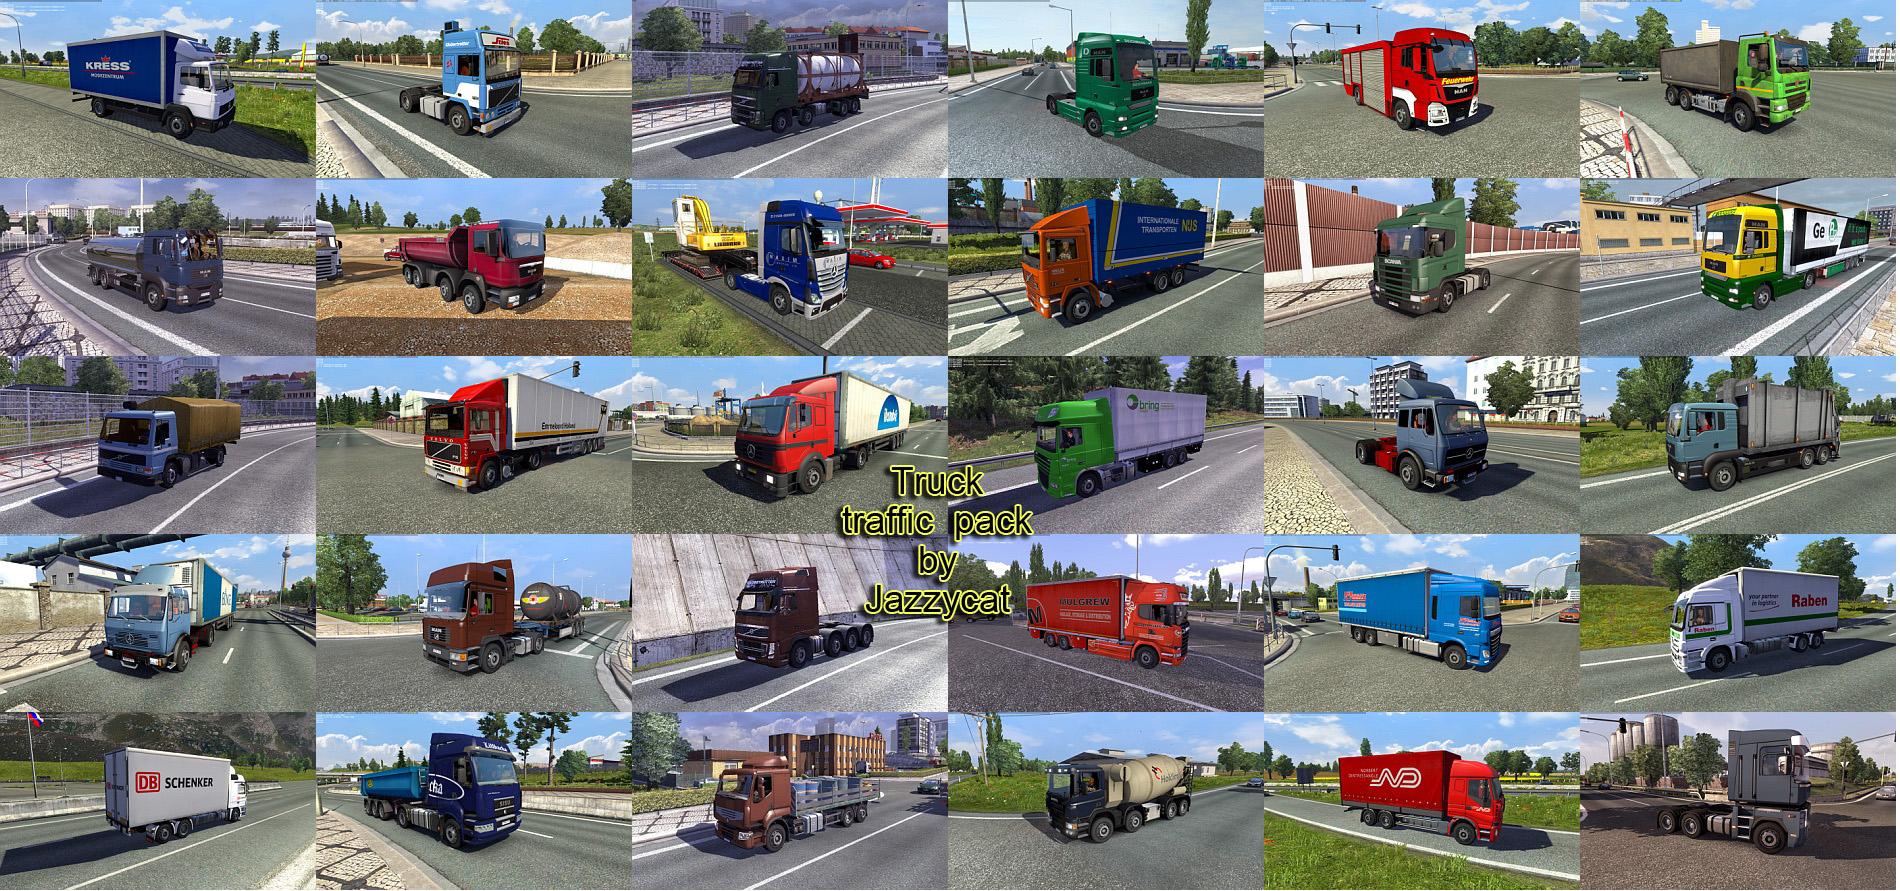 Программа для грузовиков. Euro Truck Simulator 2 пак. Етс 2 трафик. КАМАЗ В трафик в етс 2. Euro Truck Simulator 2 моды грузовиков.